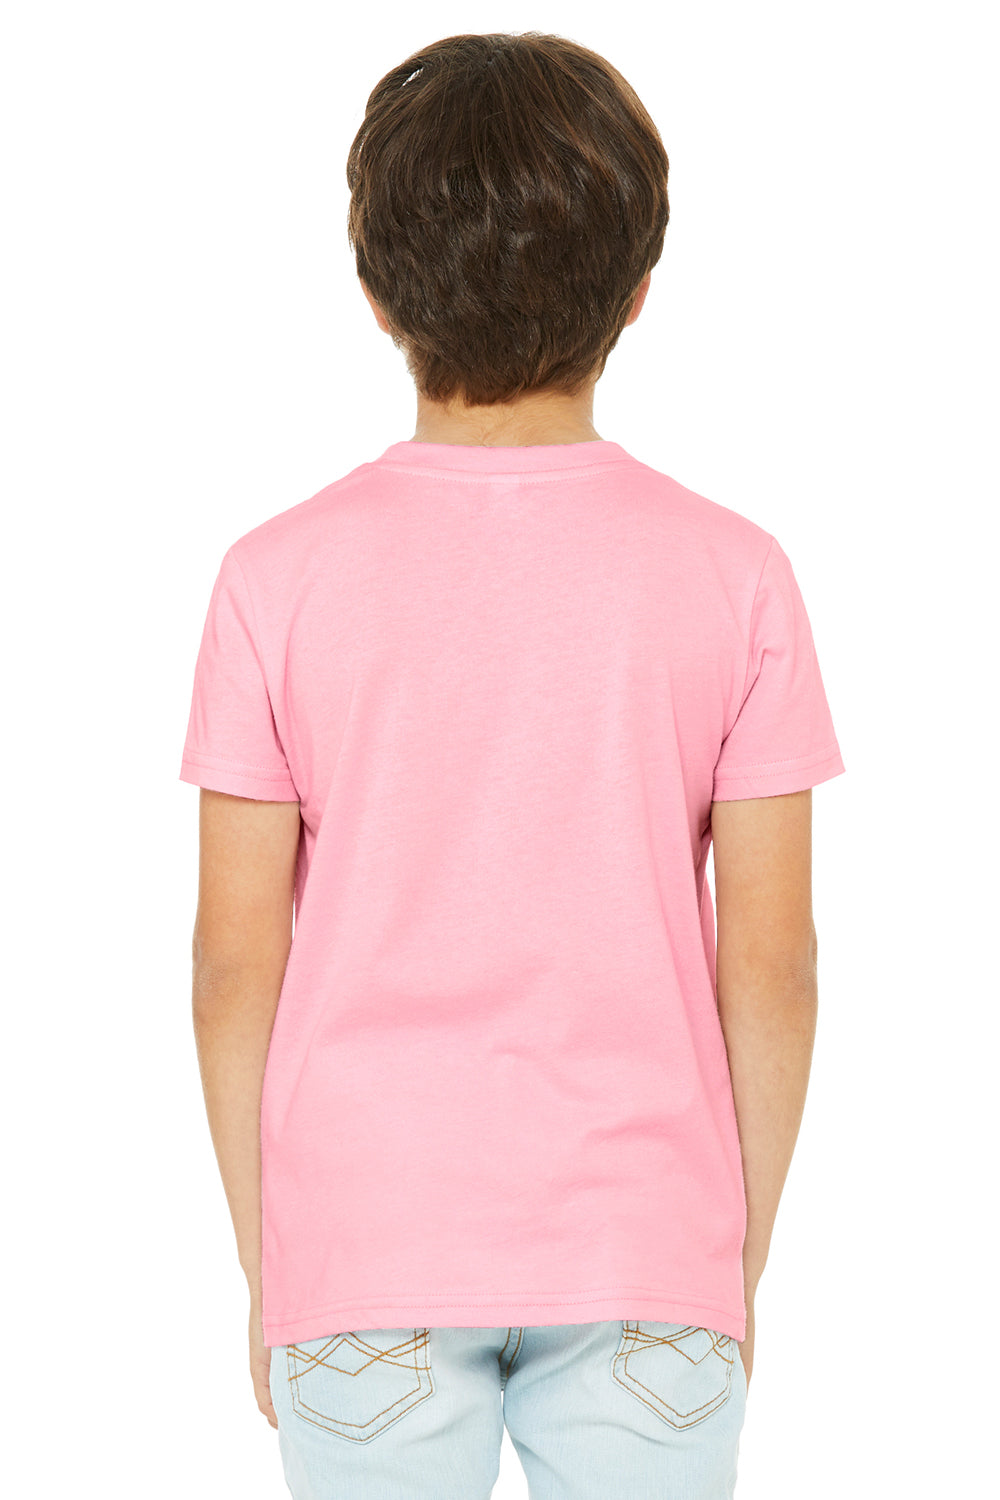 Bella + Canvas 3001Y Youth Jersey Short Sleeve Crewneck T-Shirt Pink Model Back